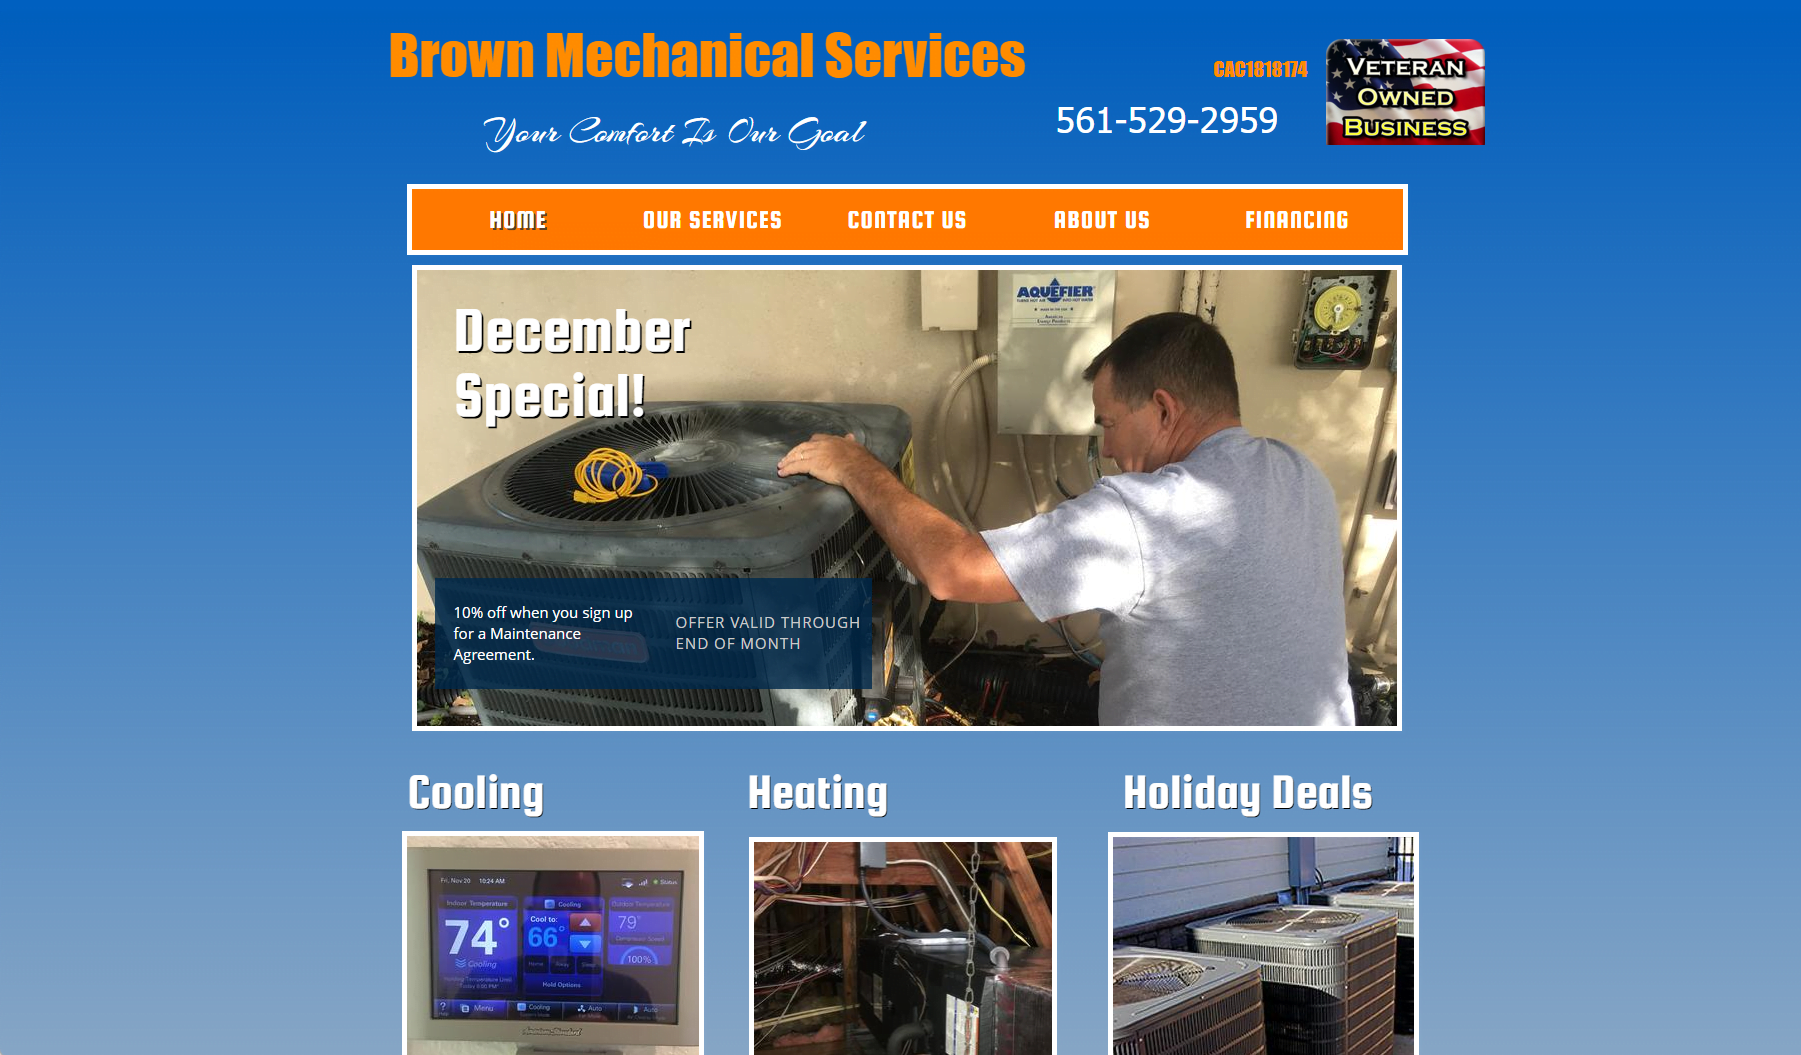 Brown Mechanical Services old website screenshot